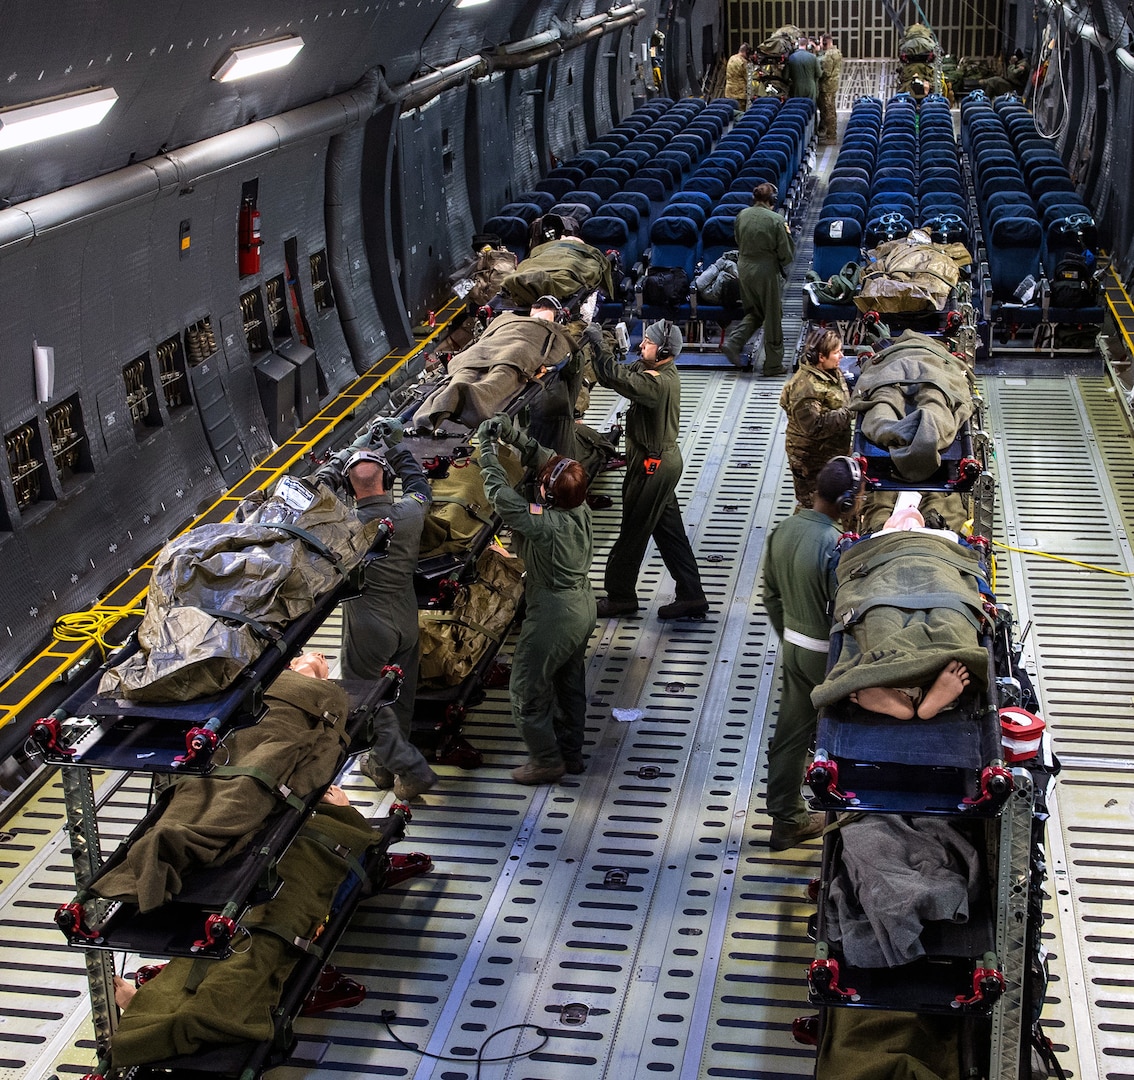 433rd Aeromedical Evacuation Squadron takes part in C5M medevac tests